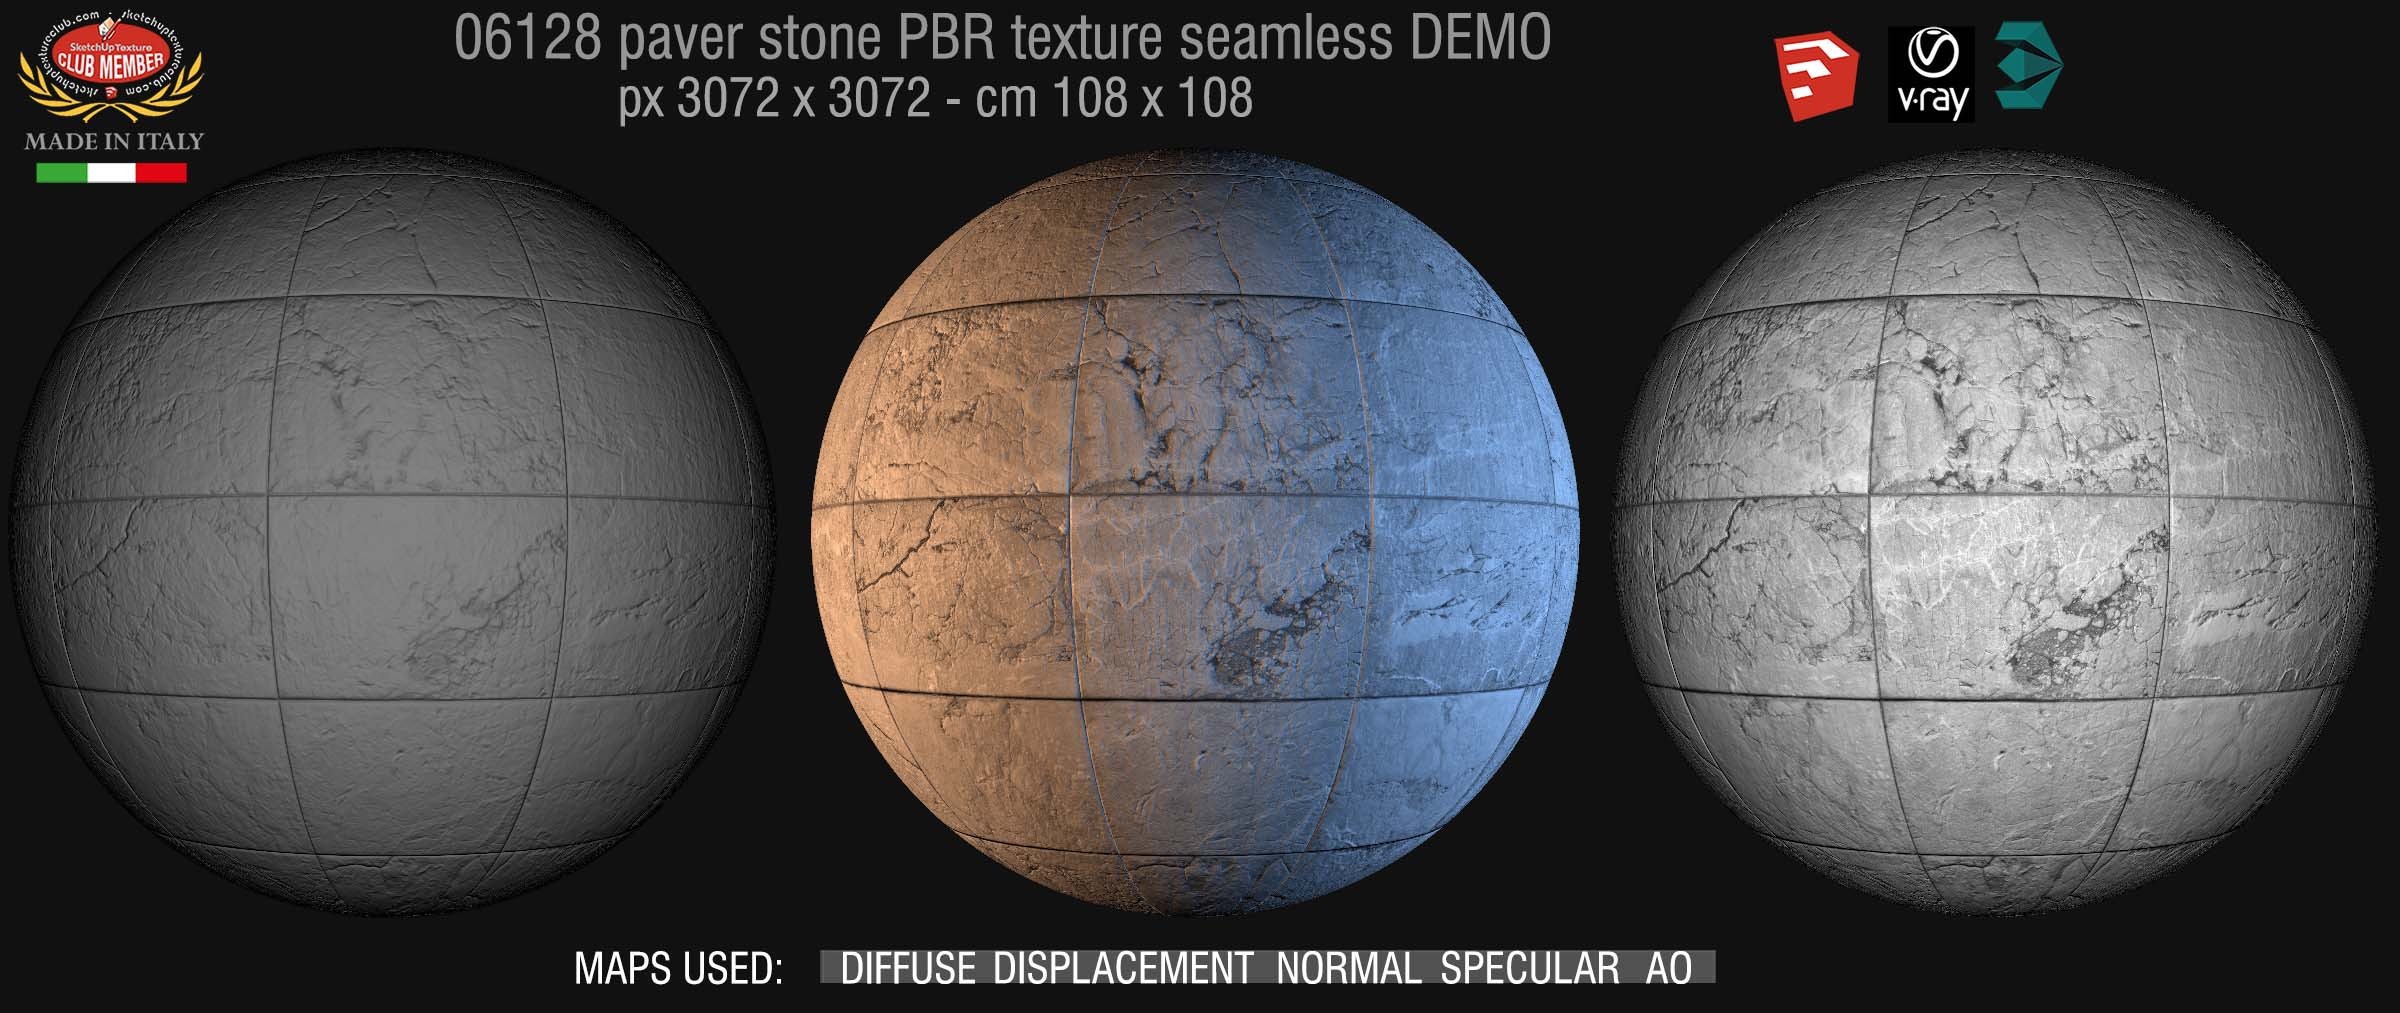 06128 paver stone PBR texture seamless DEMO